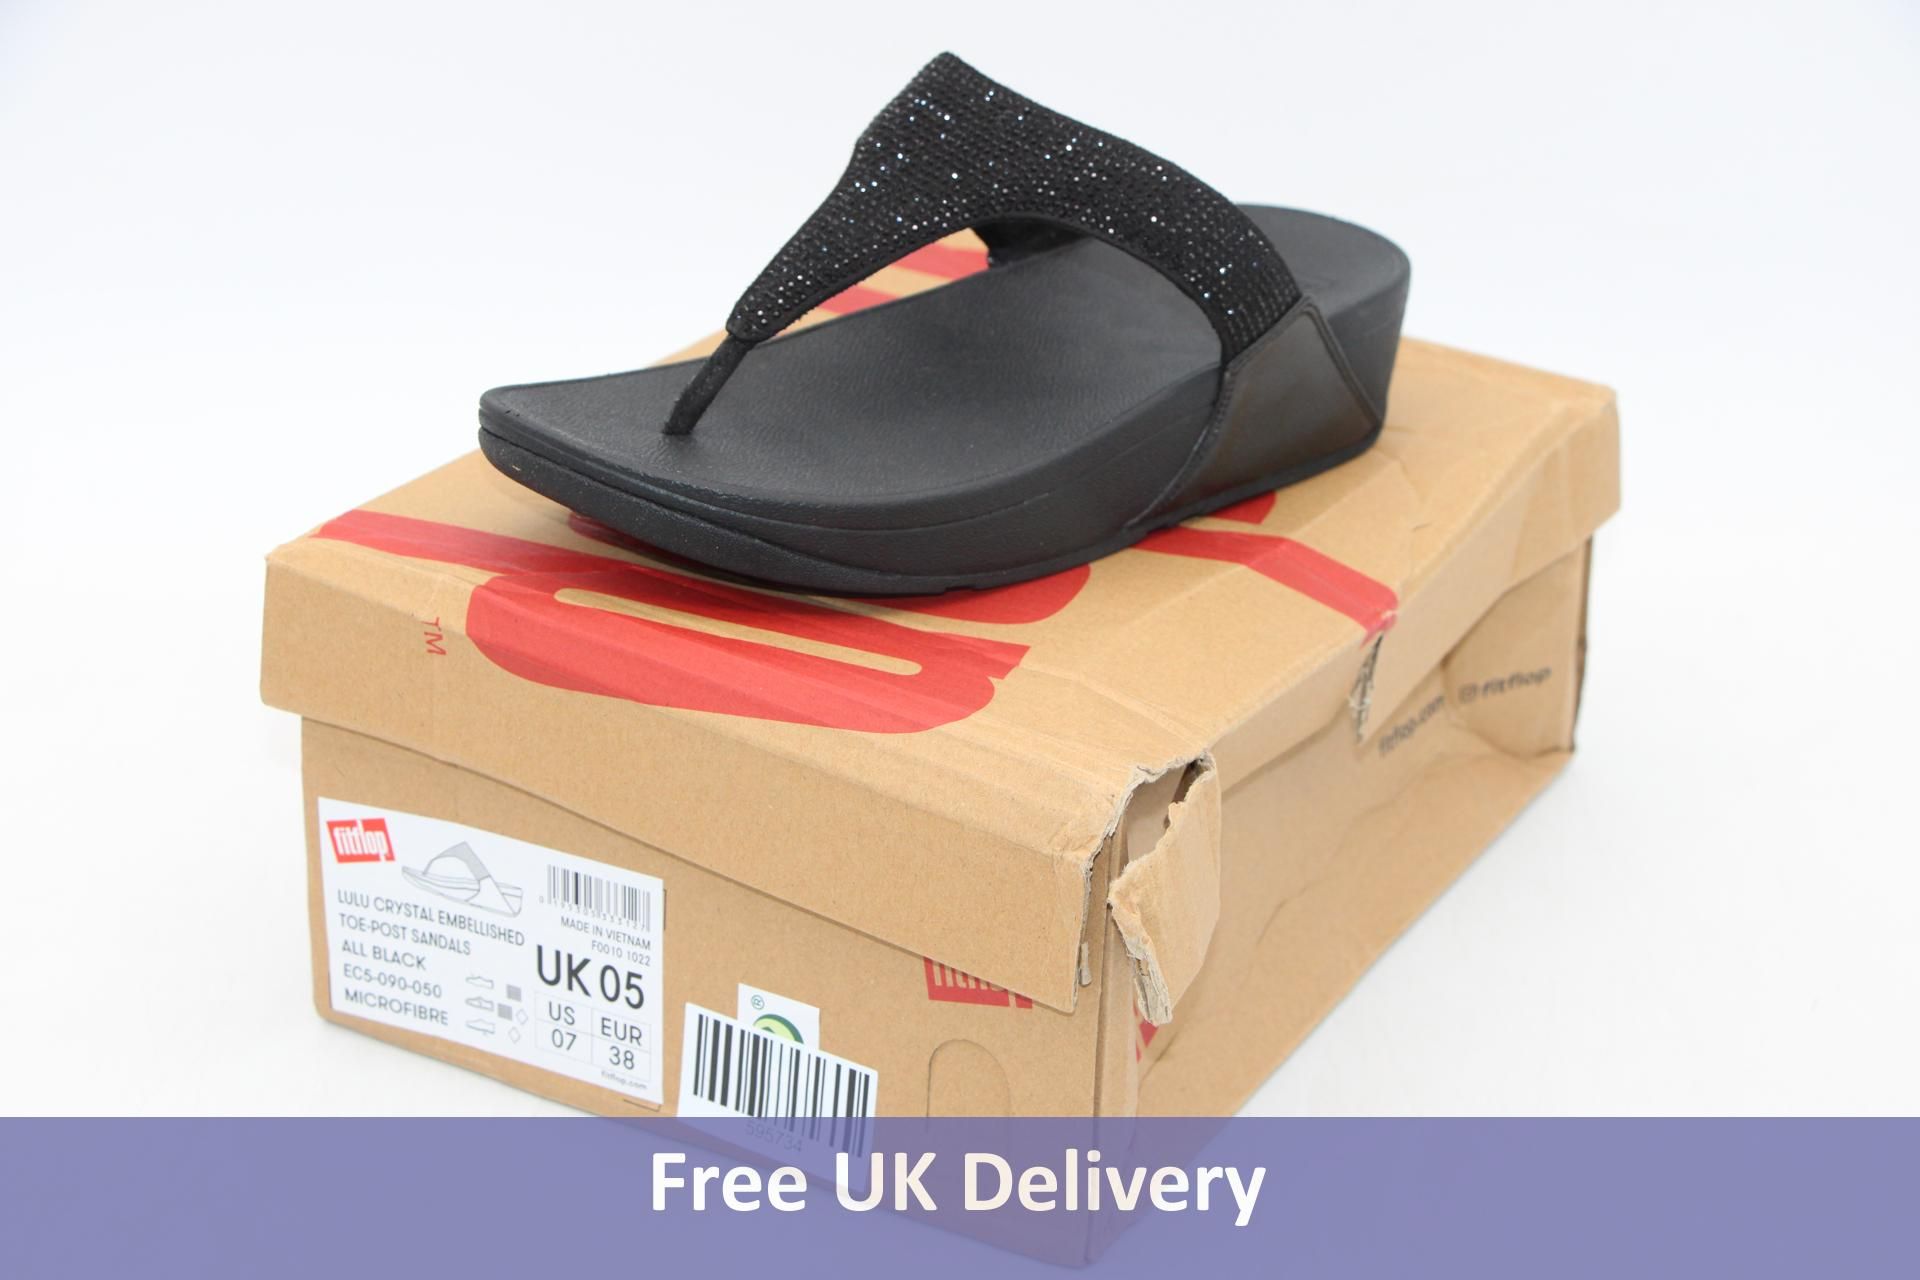 Fitflop Women's Lulu Crystal Embellished Toe Post Sandals, Black, UK 5